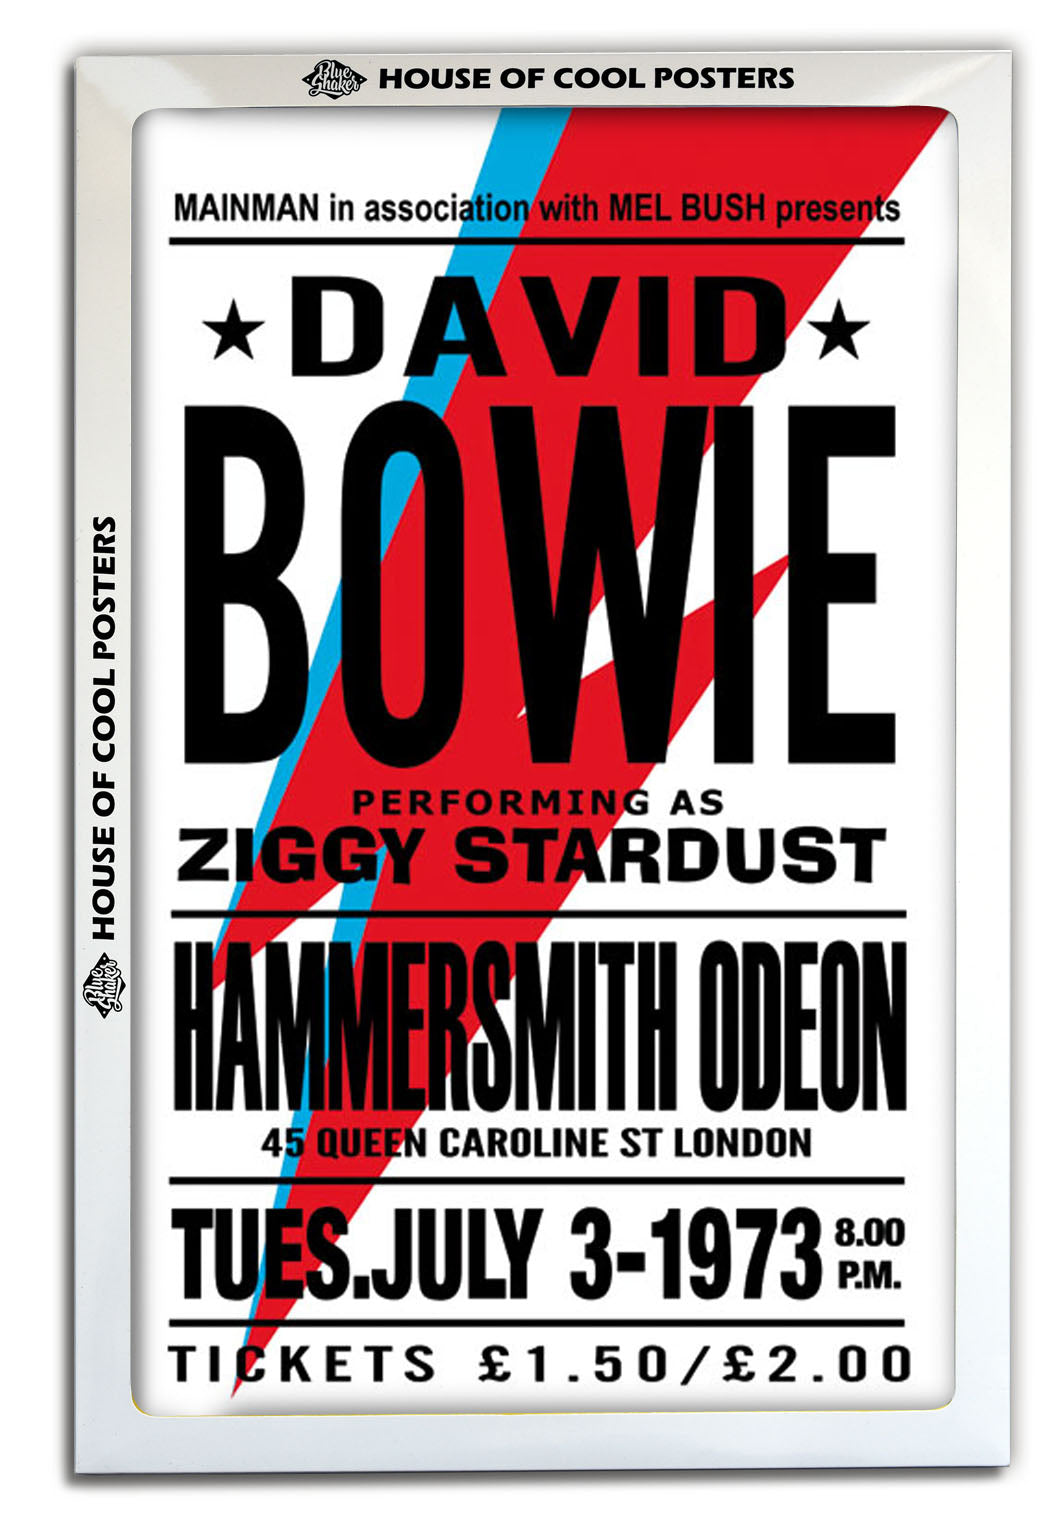 David Bowie-concerts, print-BLUE SHAKER